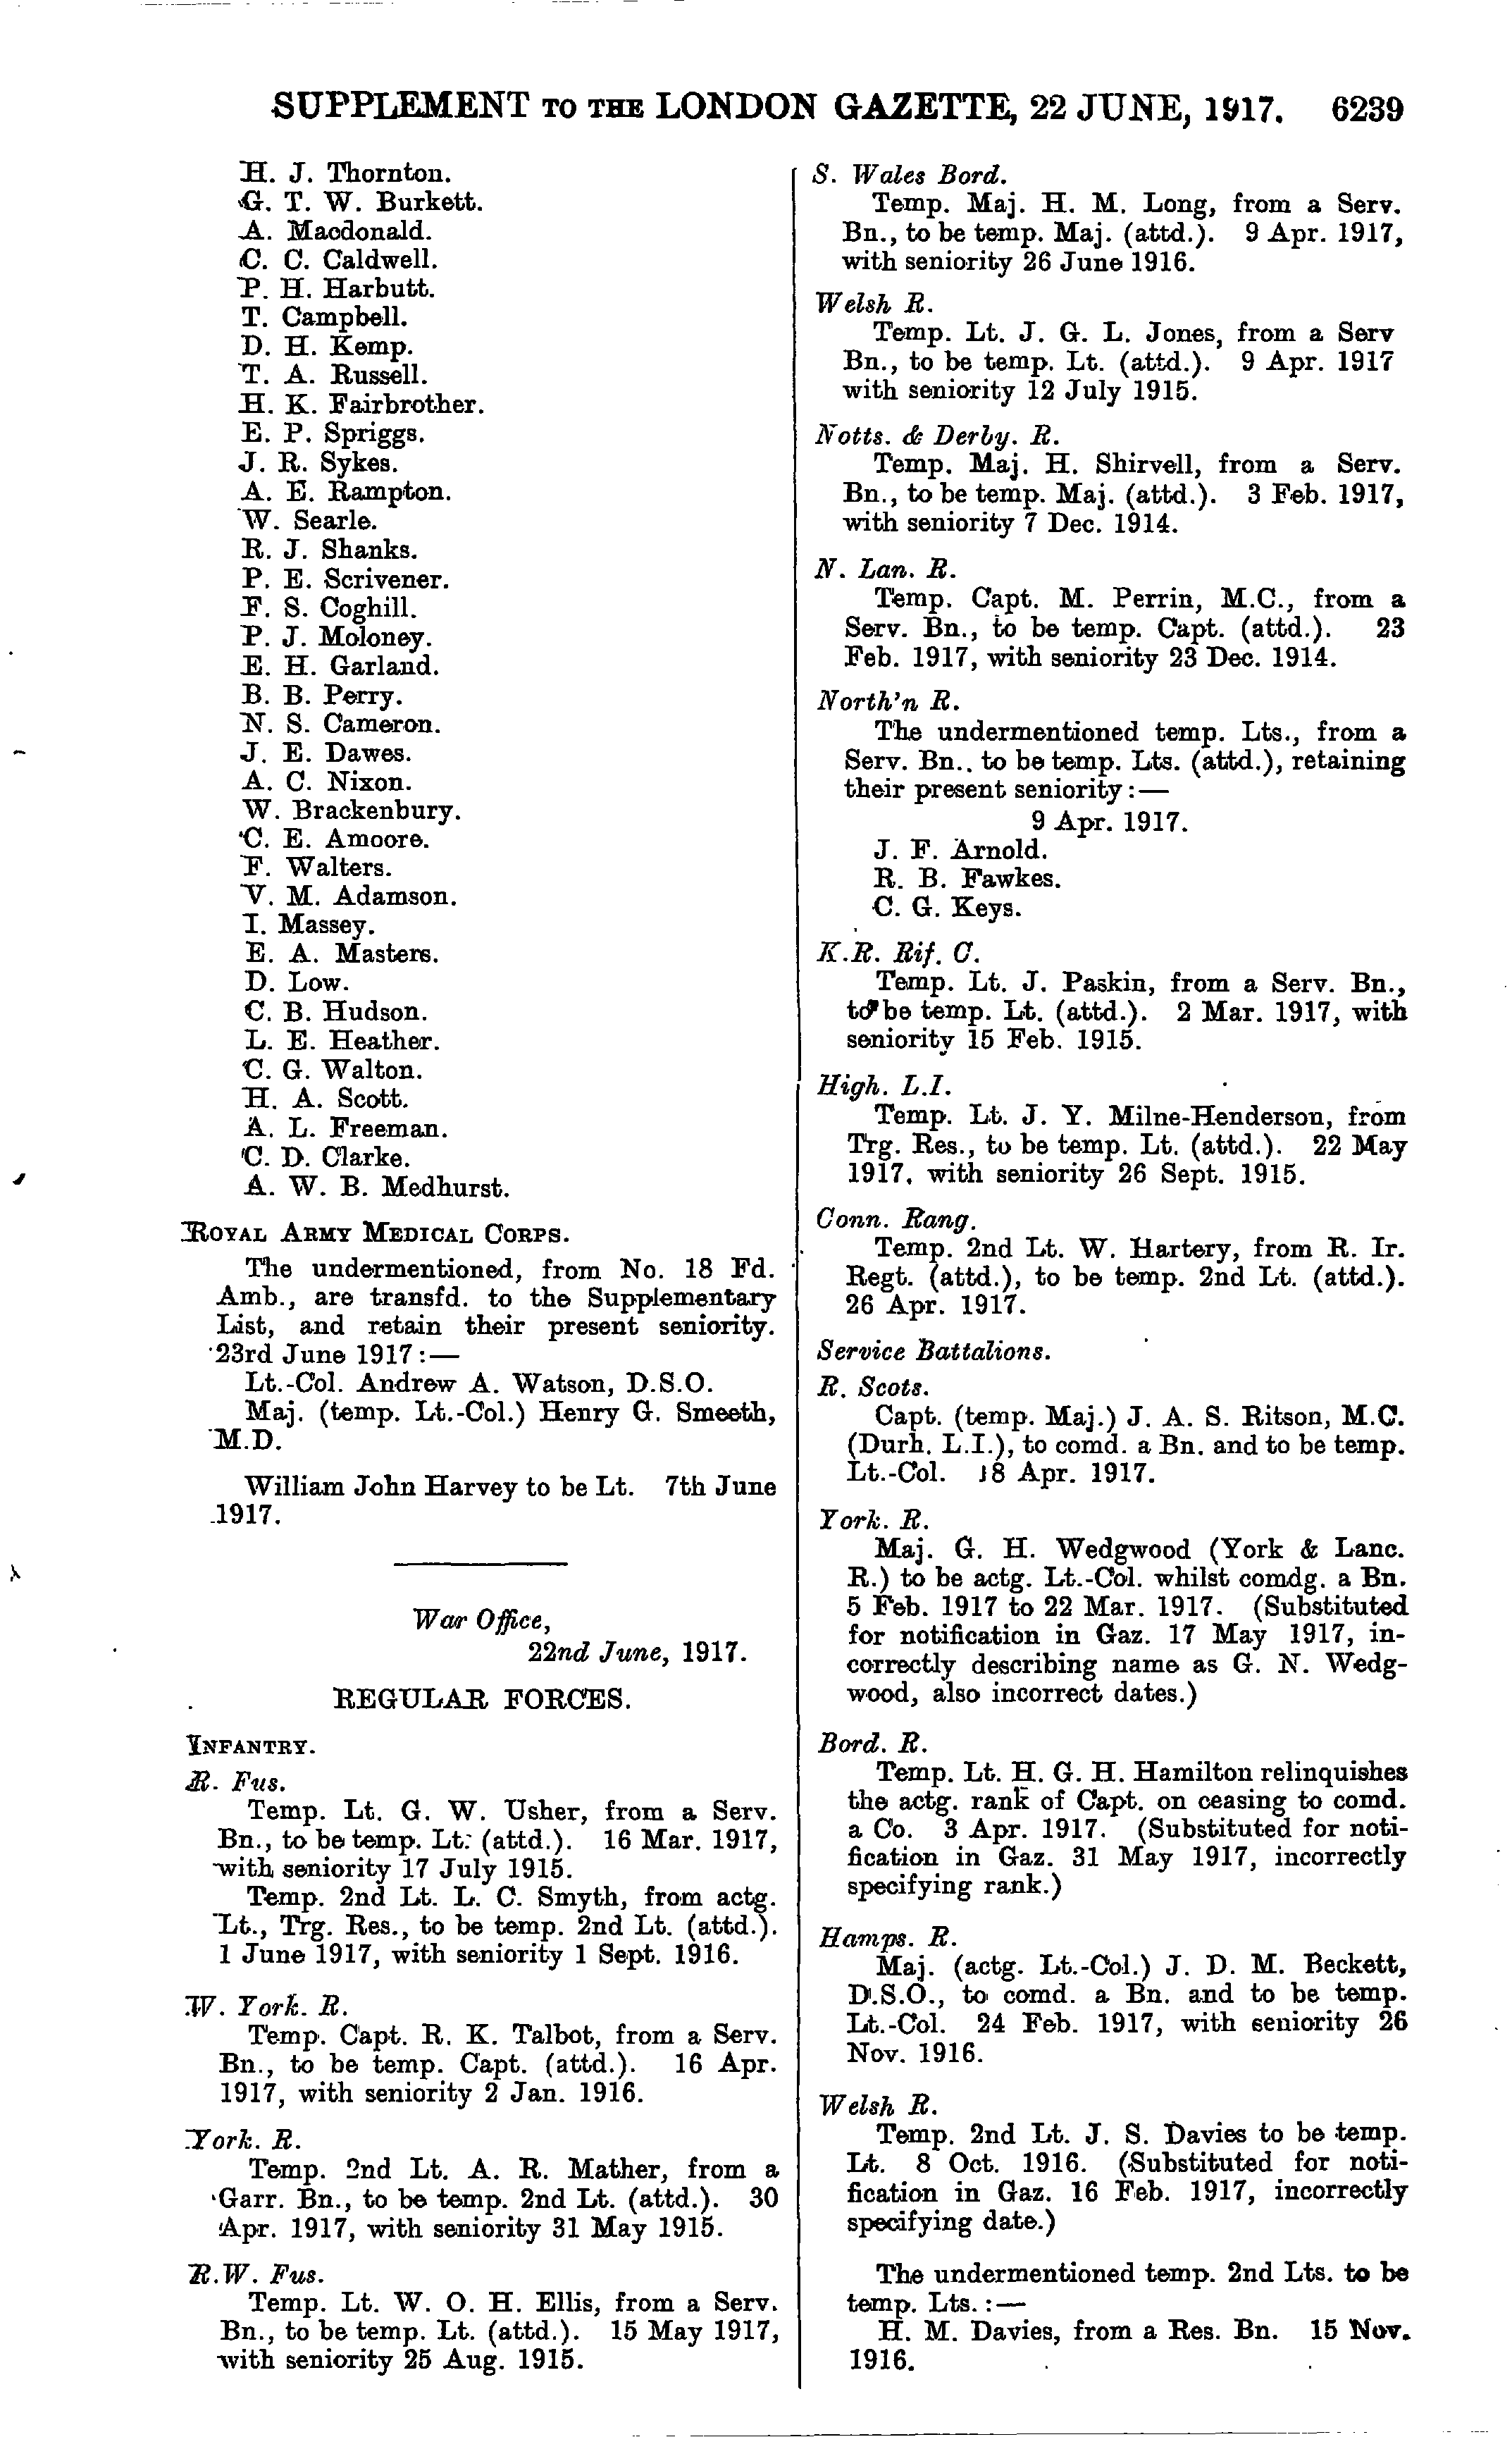 Supplement to the London Gazette, June 22, 1917, https://www.thegazette.co.uk/